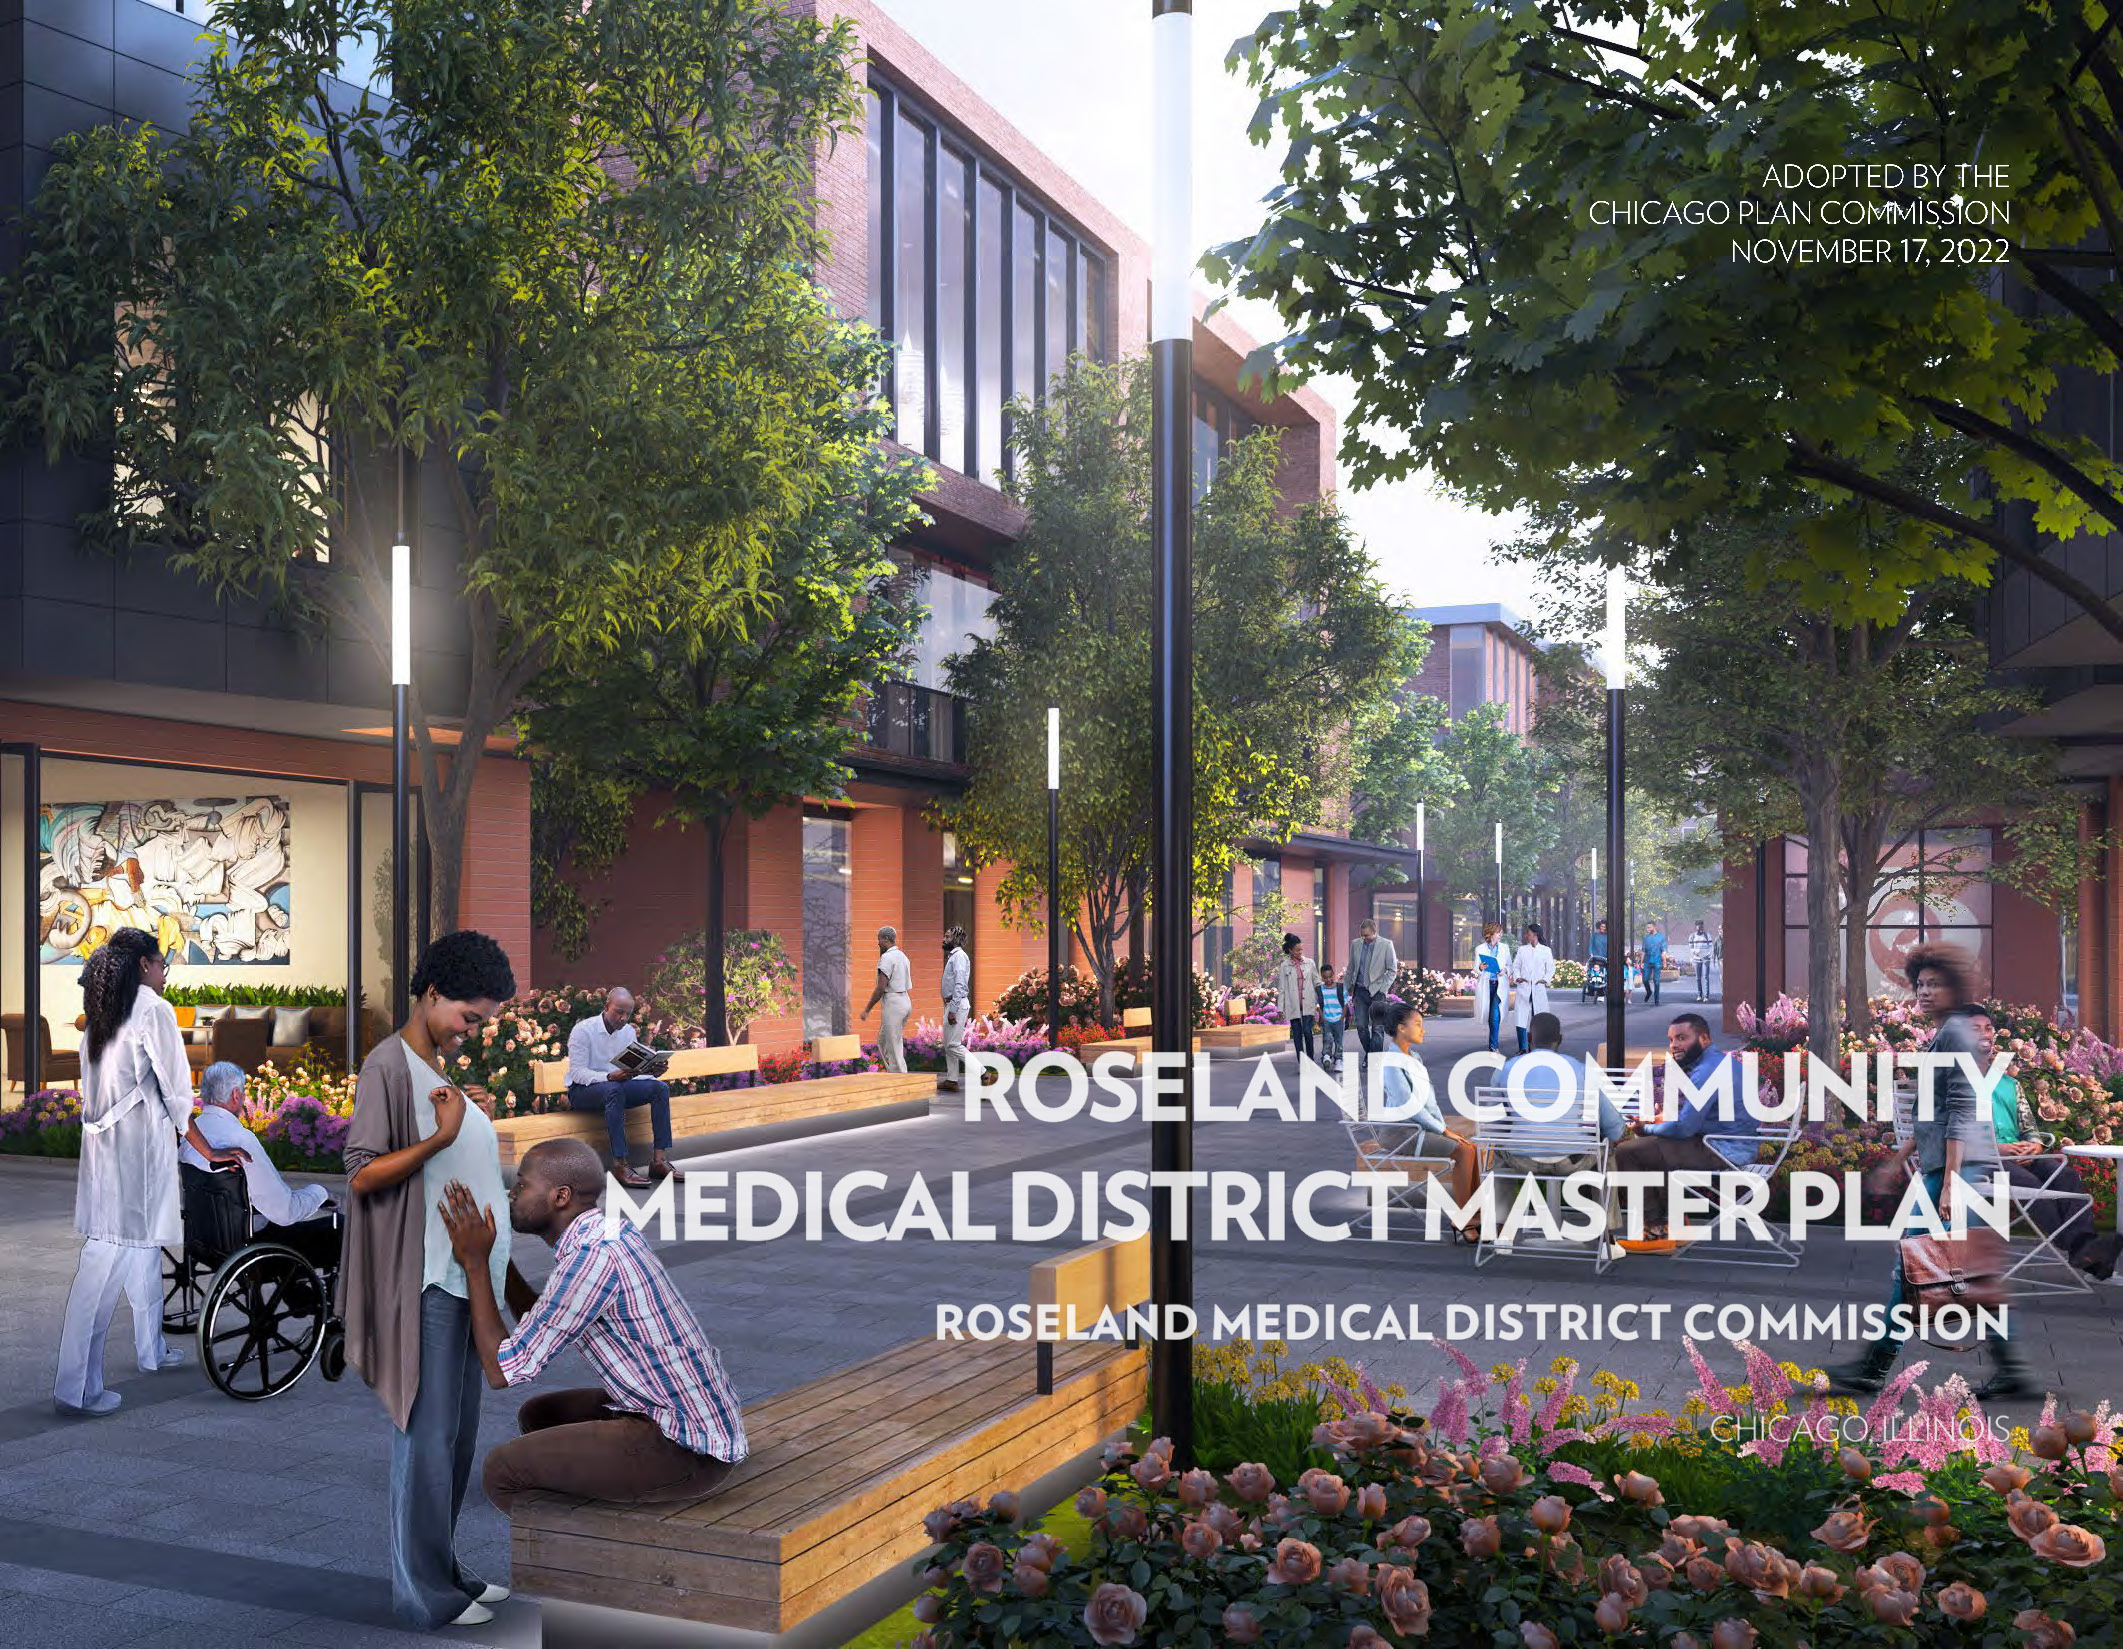 Roseland Community Medical District Master Plan document